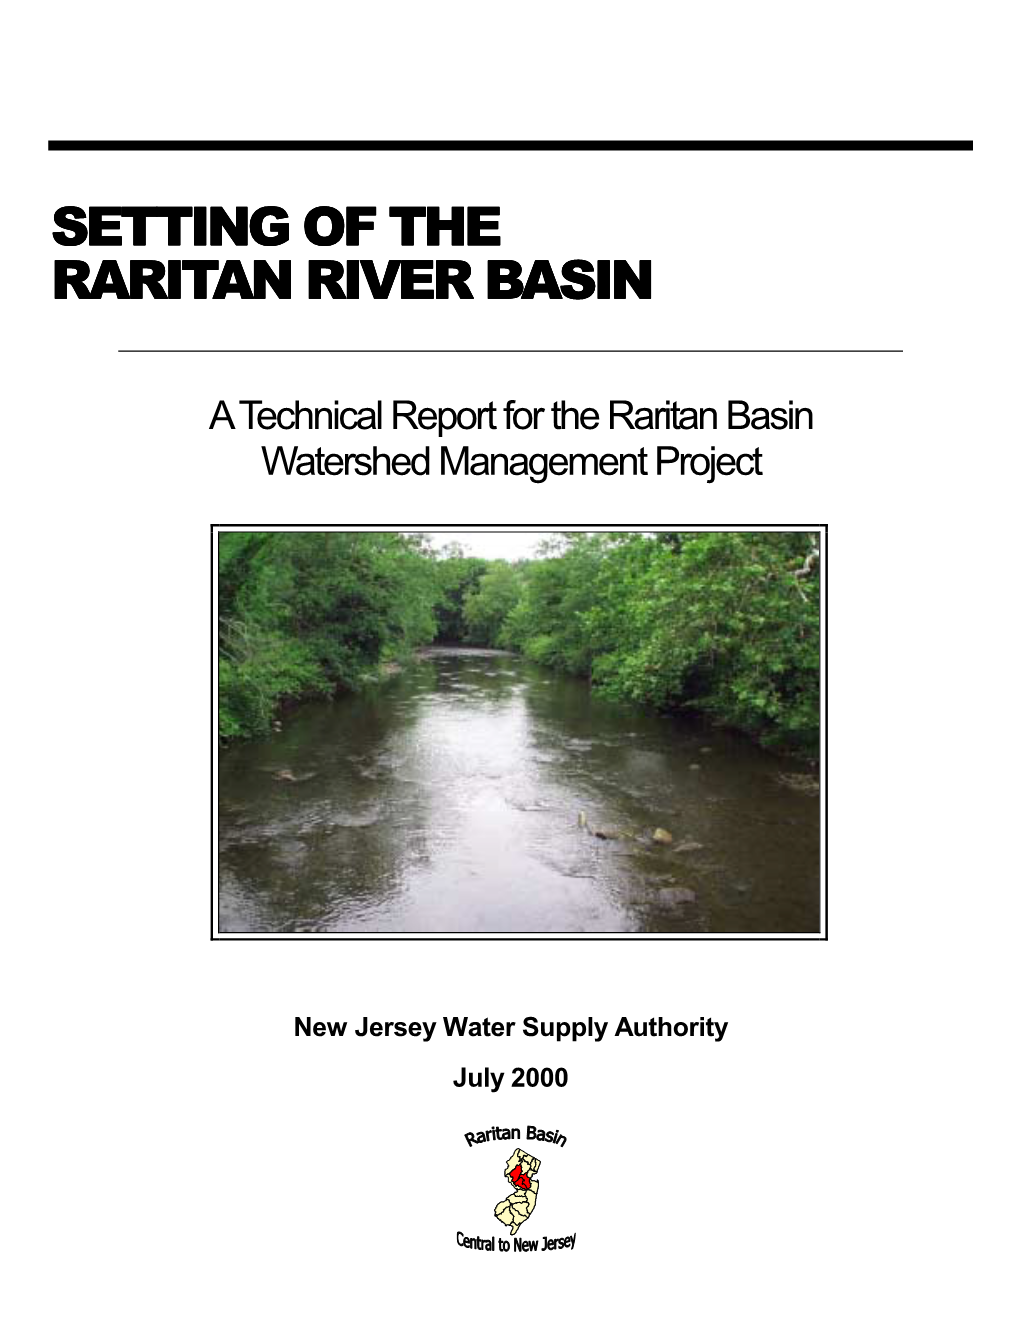 Raritan River Basin Setting Technical Report